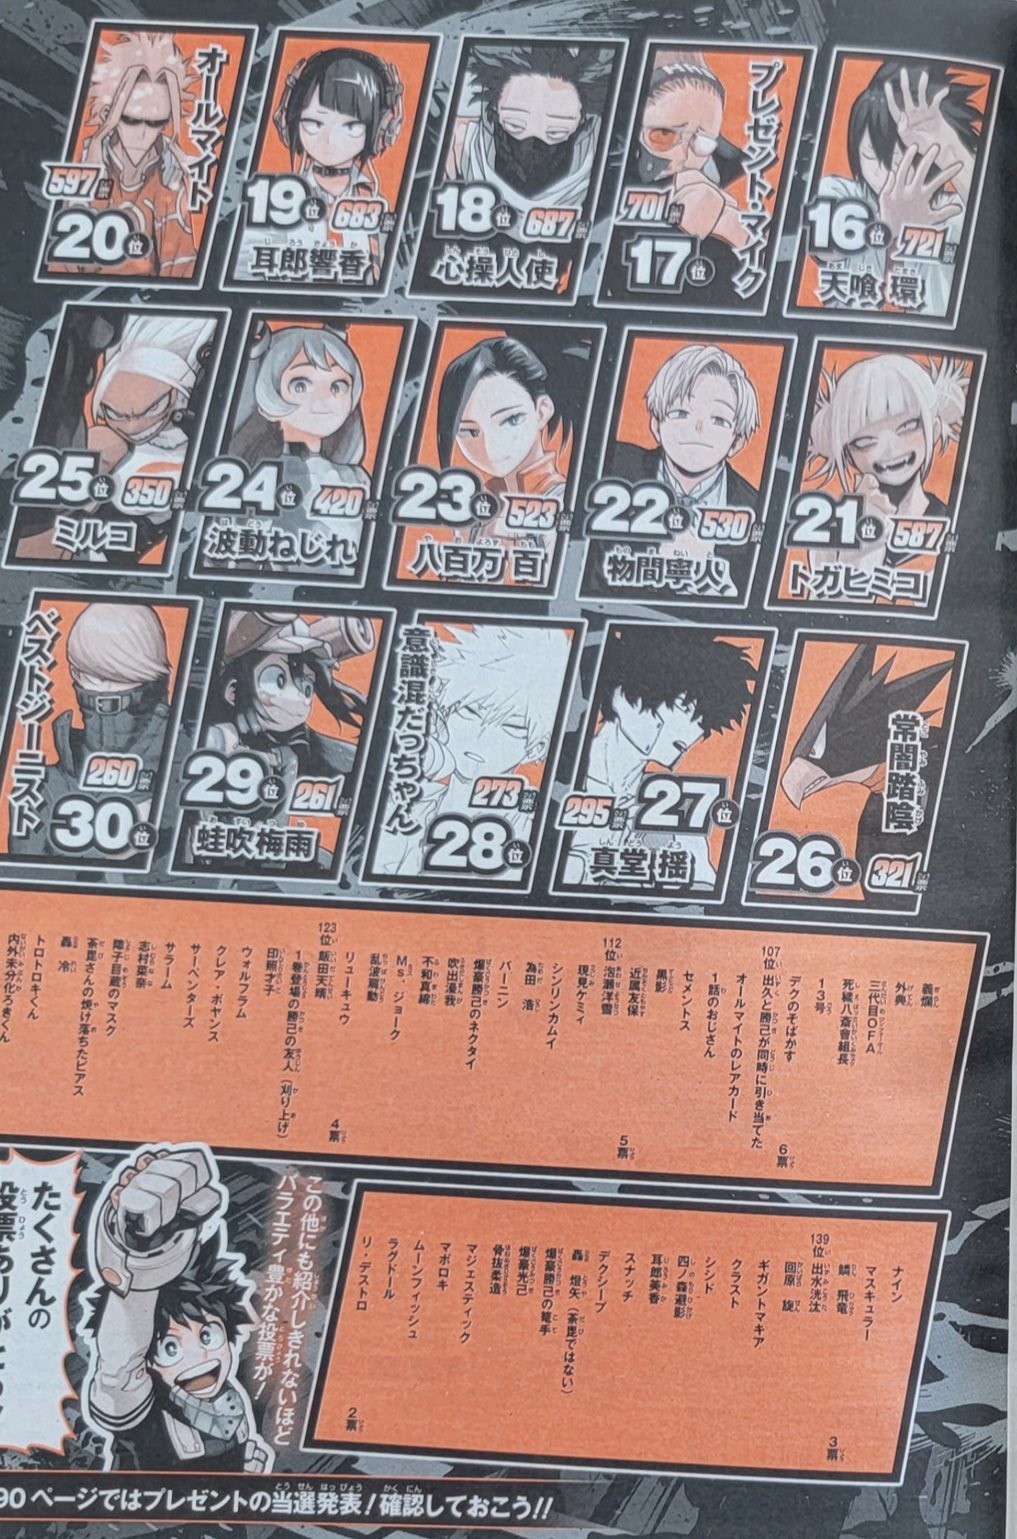 Mikey dominates Tokyo Revengers manga's latest popularity poll